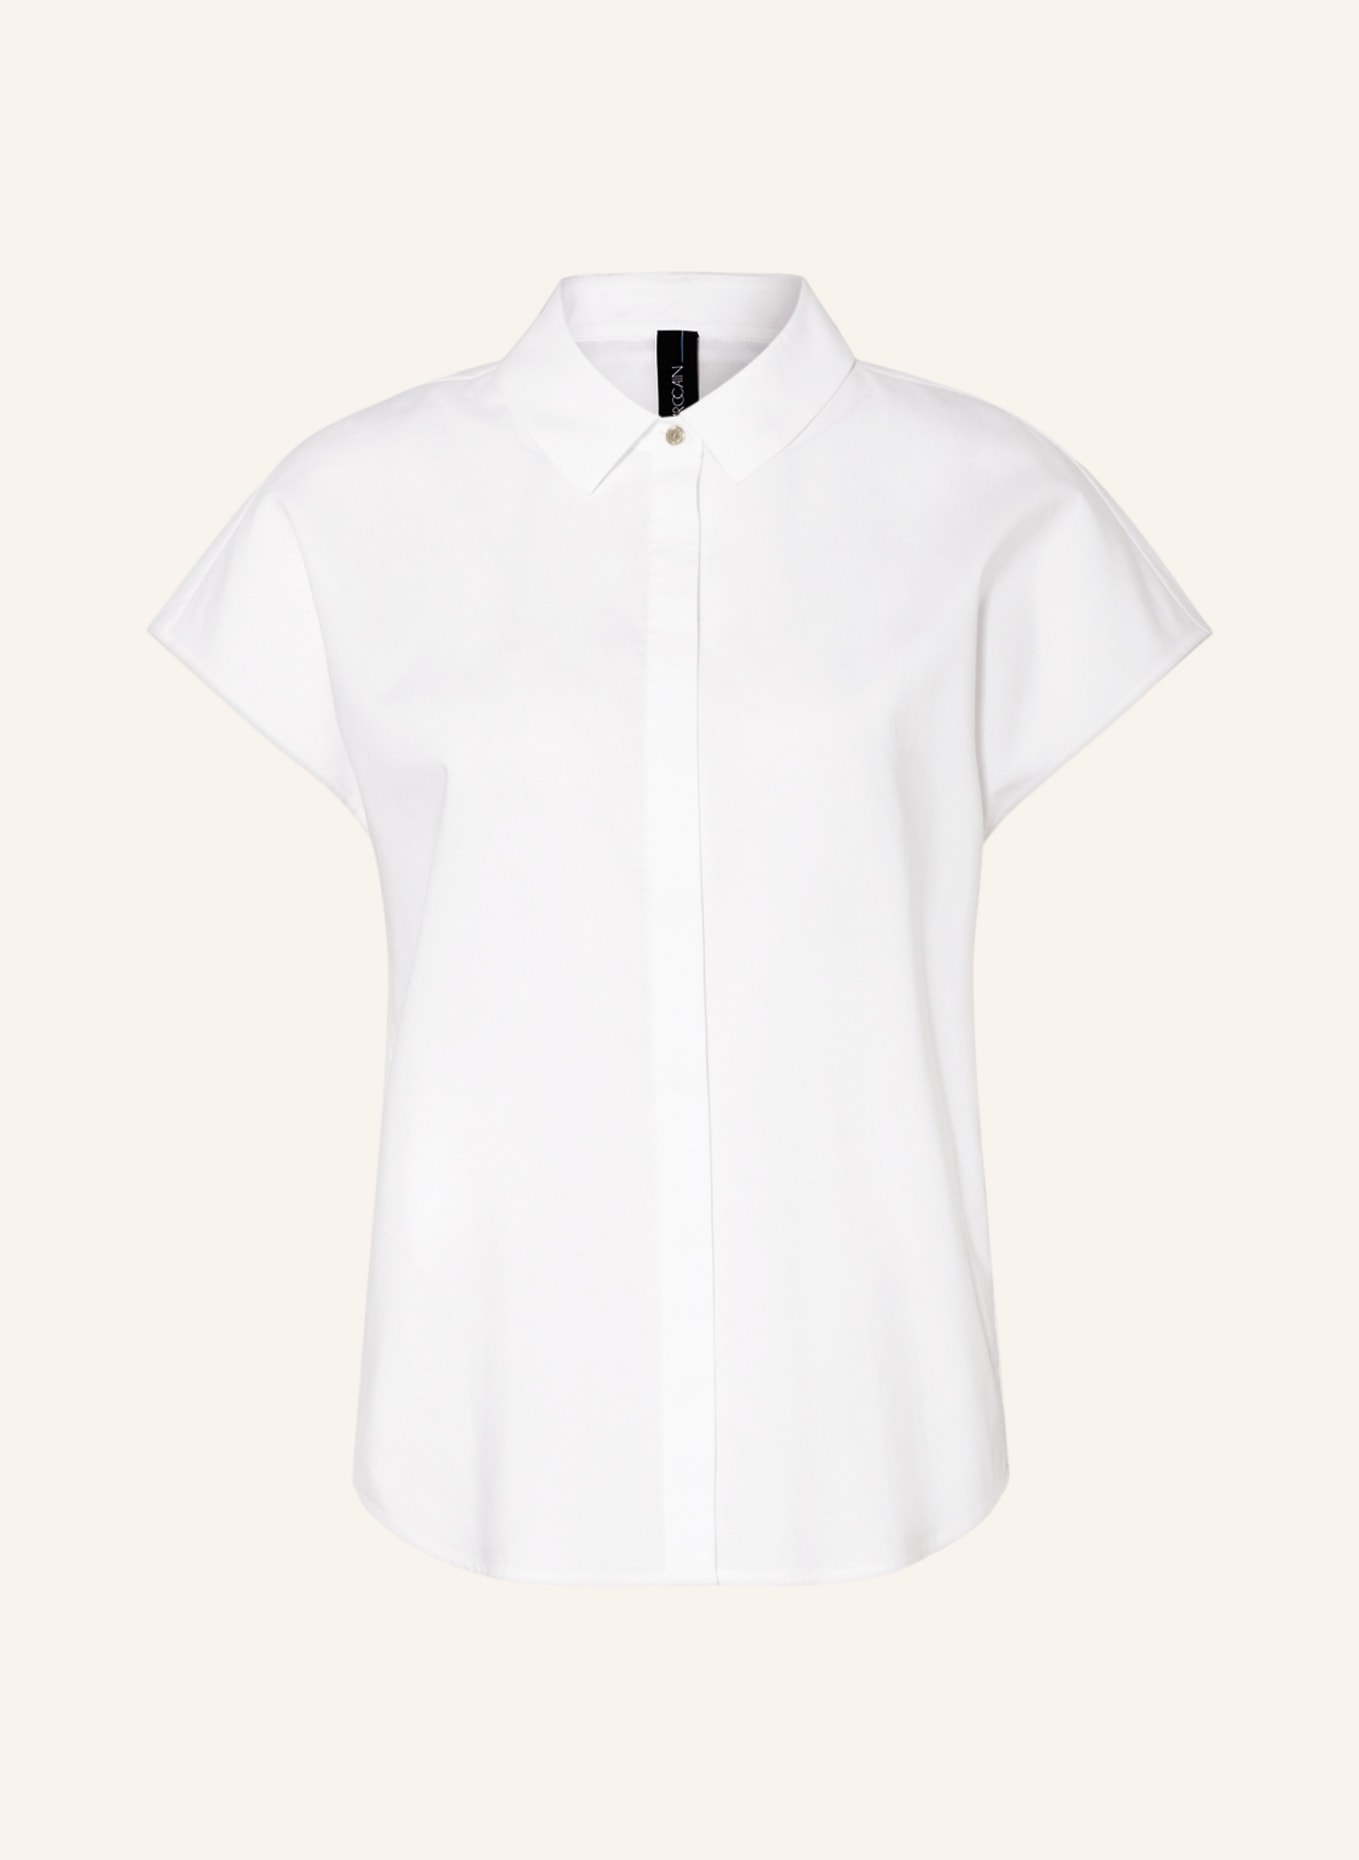 MARC CAIN Hemdbluse, Farbe: 100 WHITE (Bild 1)